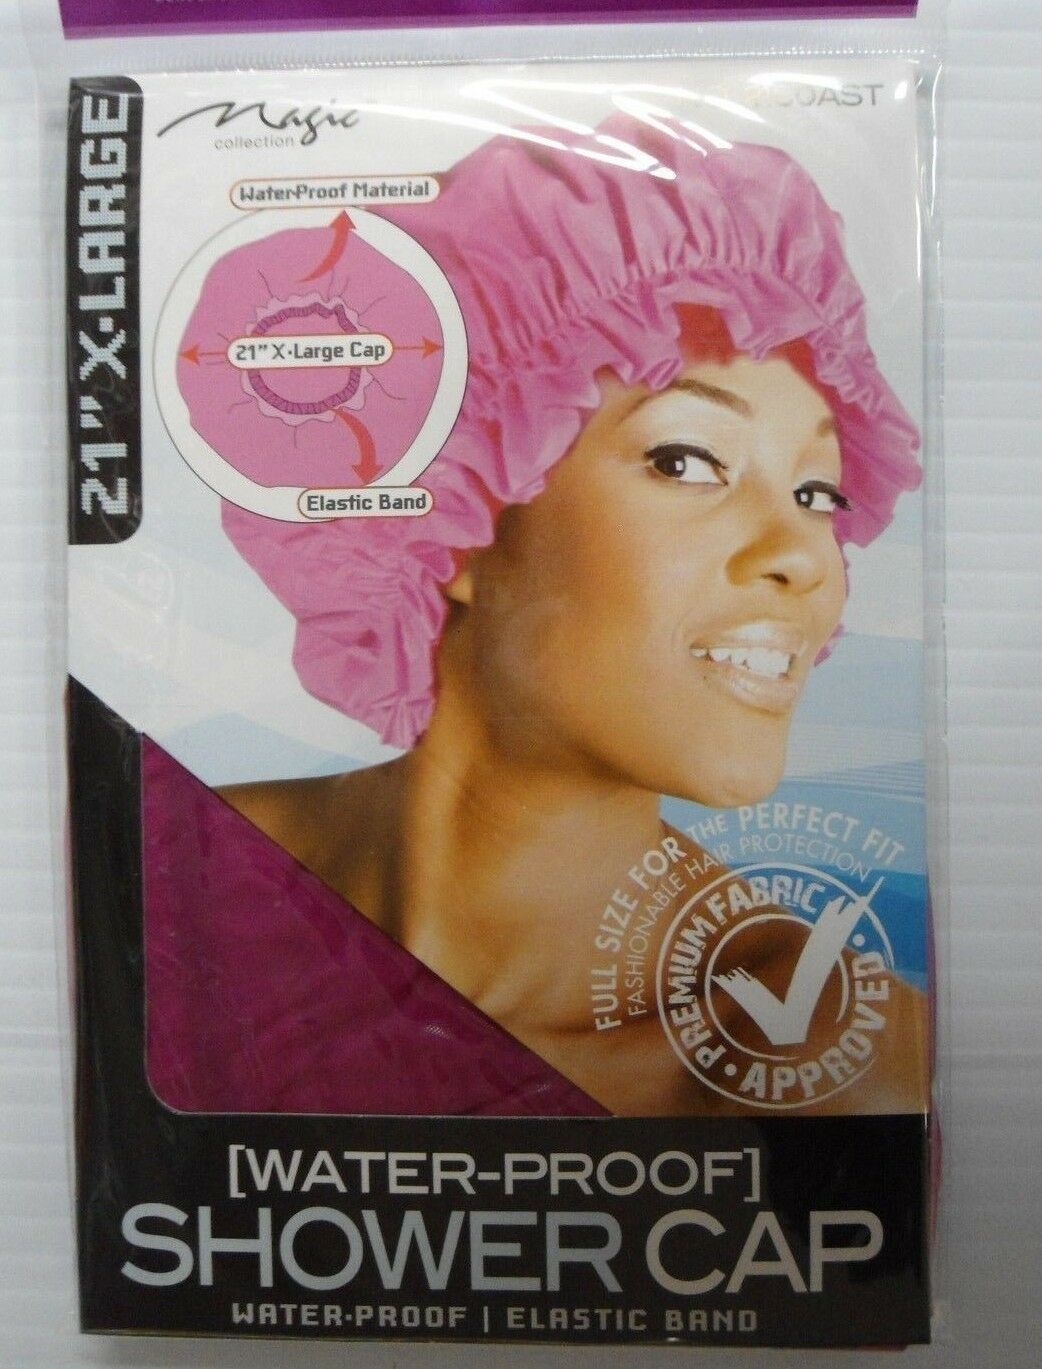 21" X-large, Waterproof, Elastic Band Shower Cap Assorted Colors Keep Hair Fresh